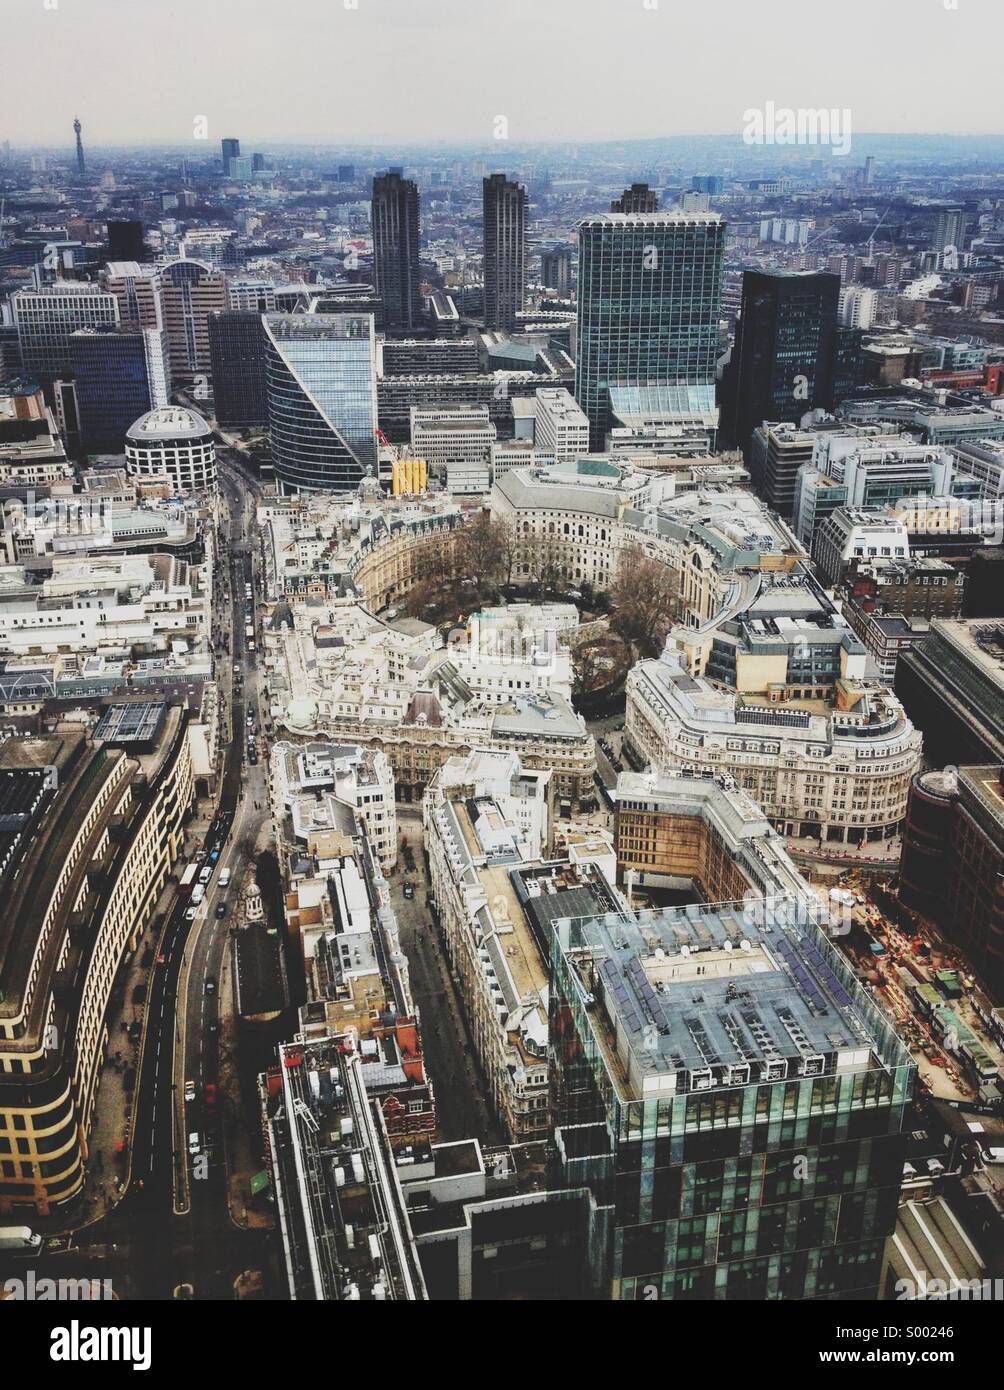 El paisaje de la ciudad de Londres - vista aérea. Foto de stock